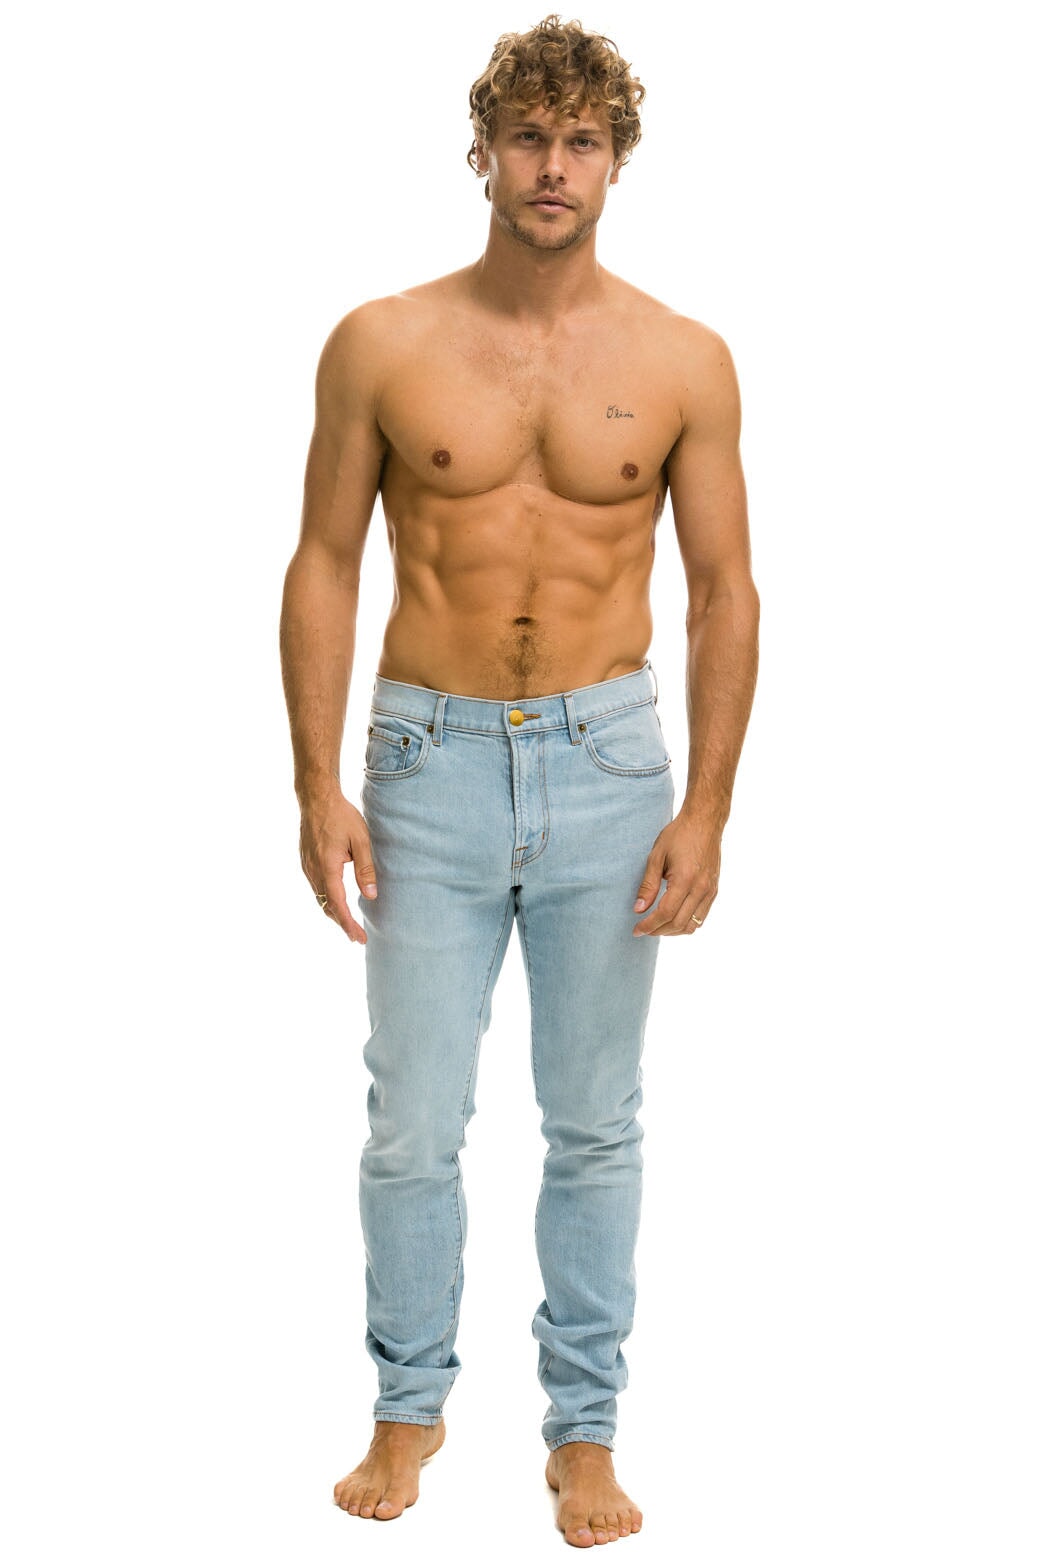 Discover 139+ best fitting men’s pants best